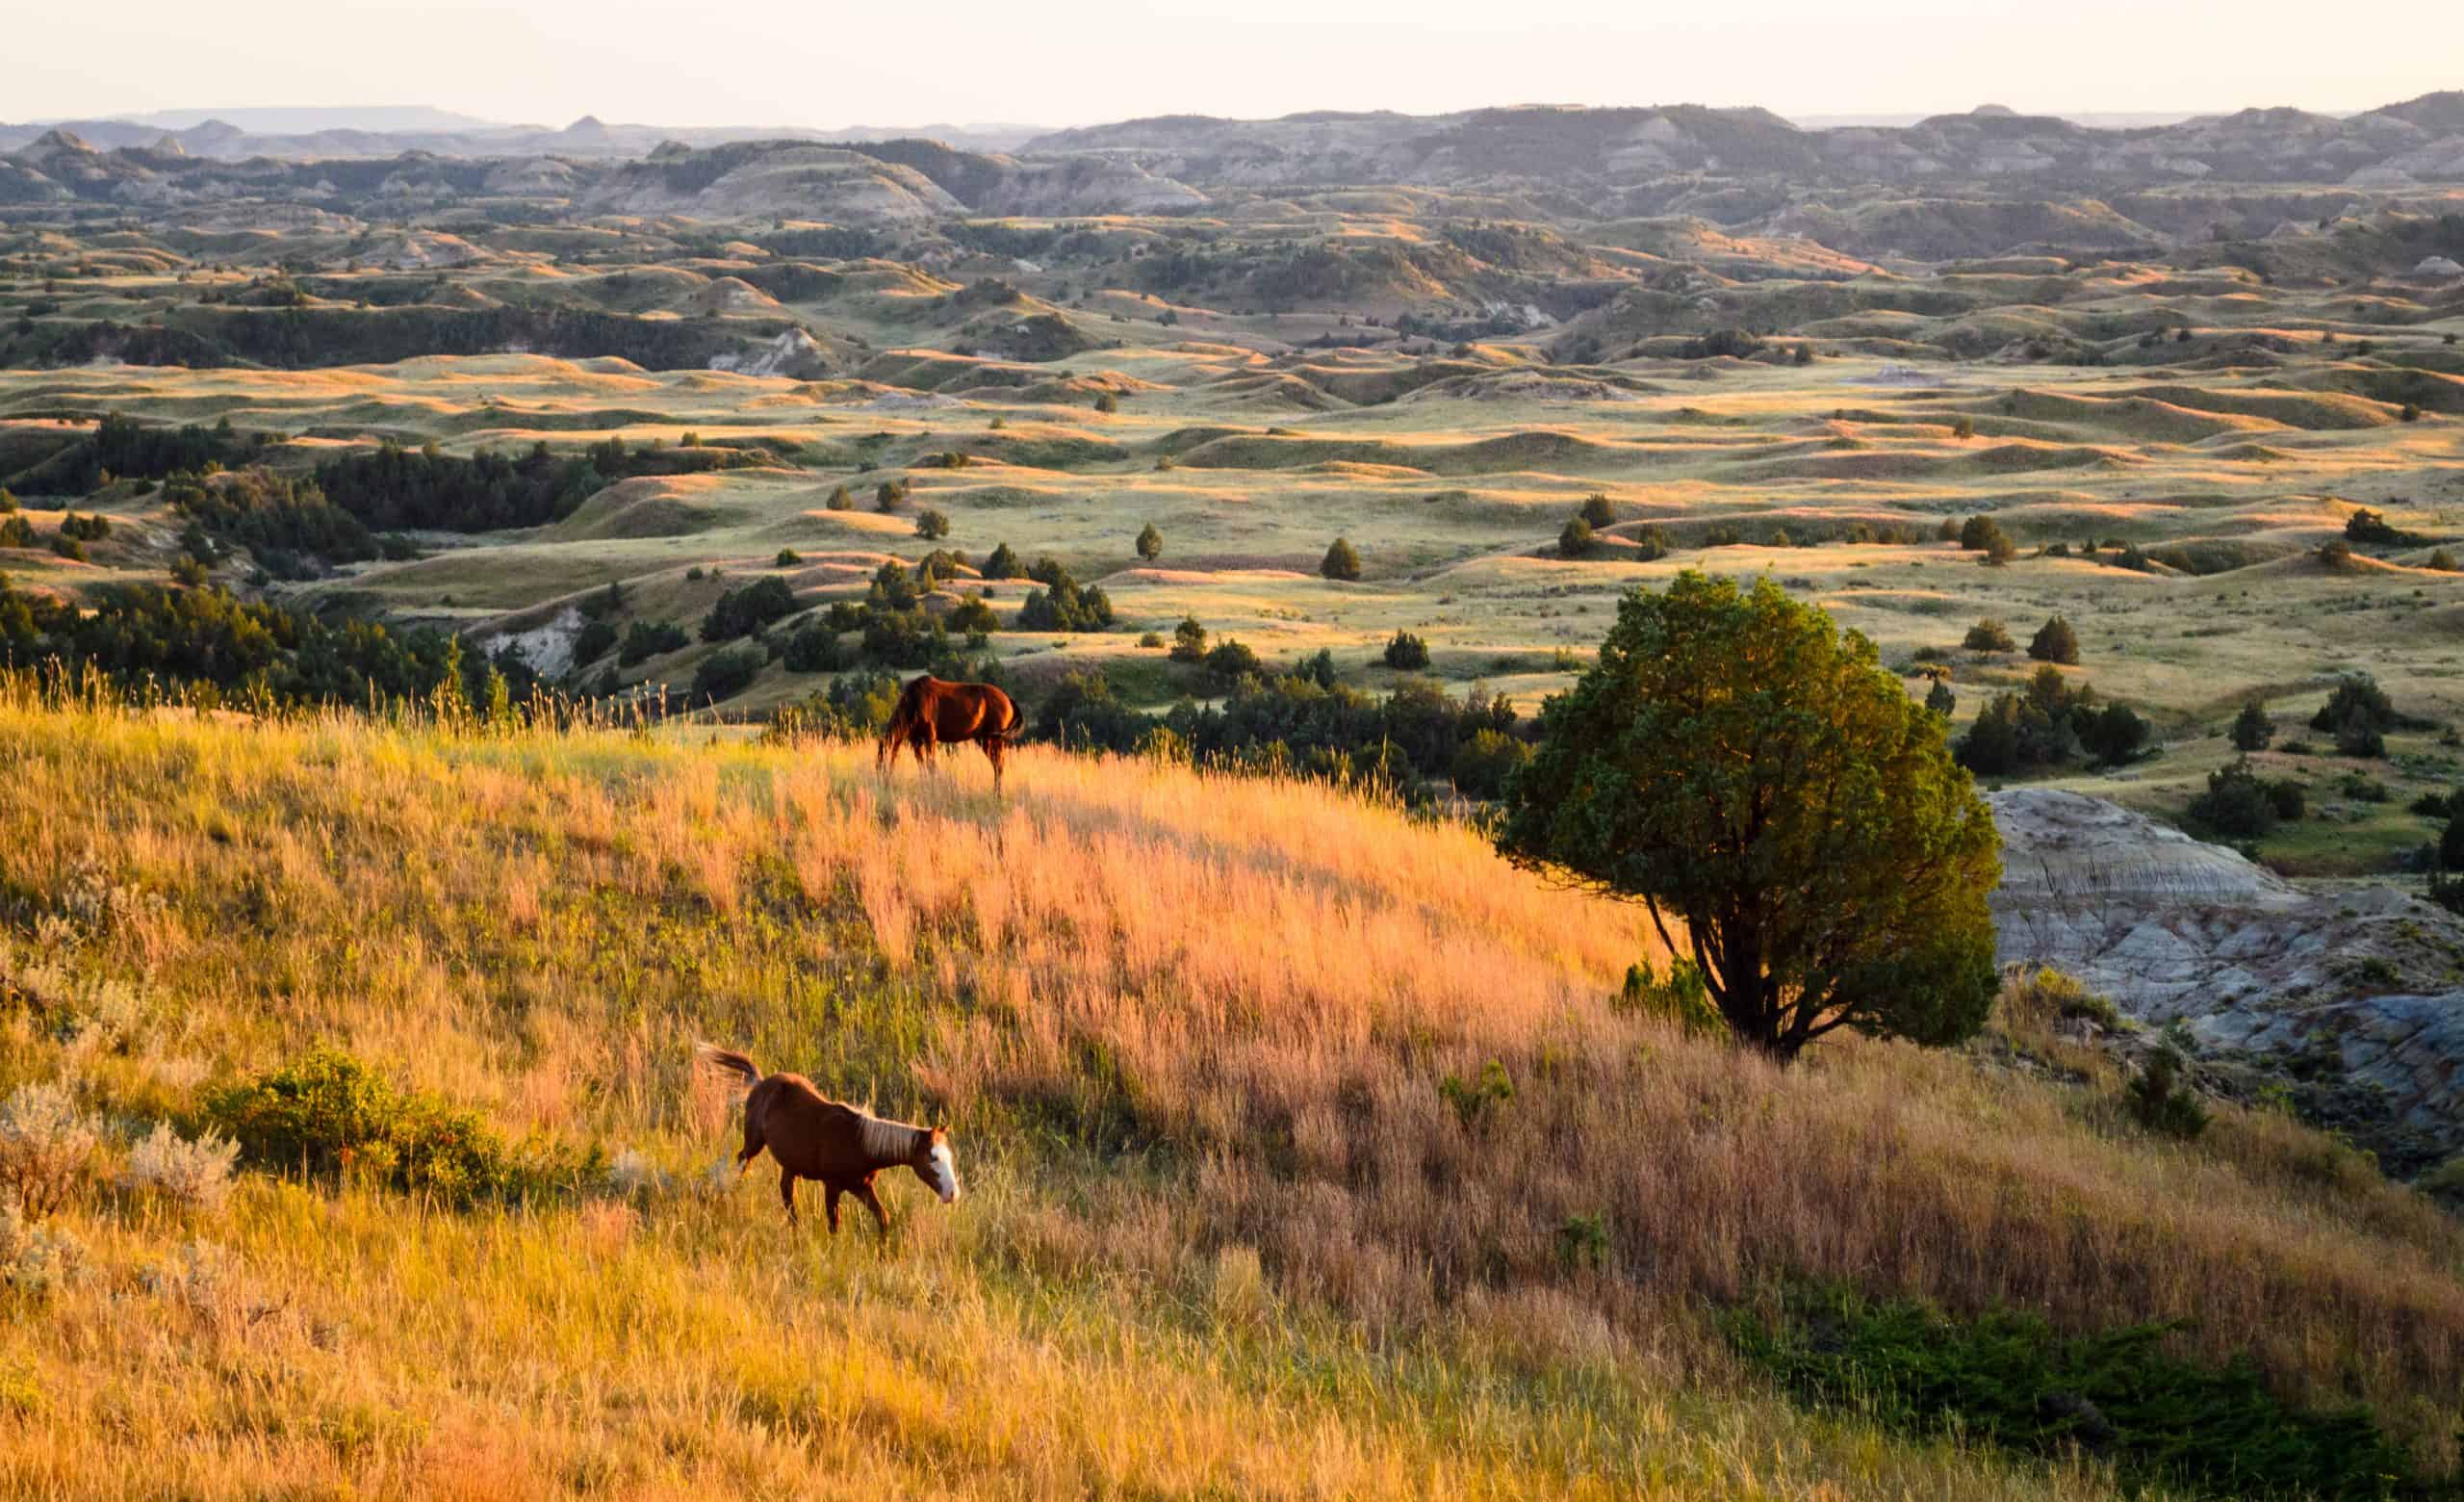 where do wild horses live